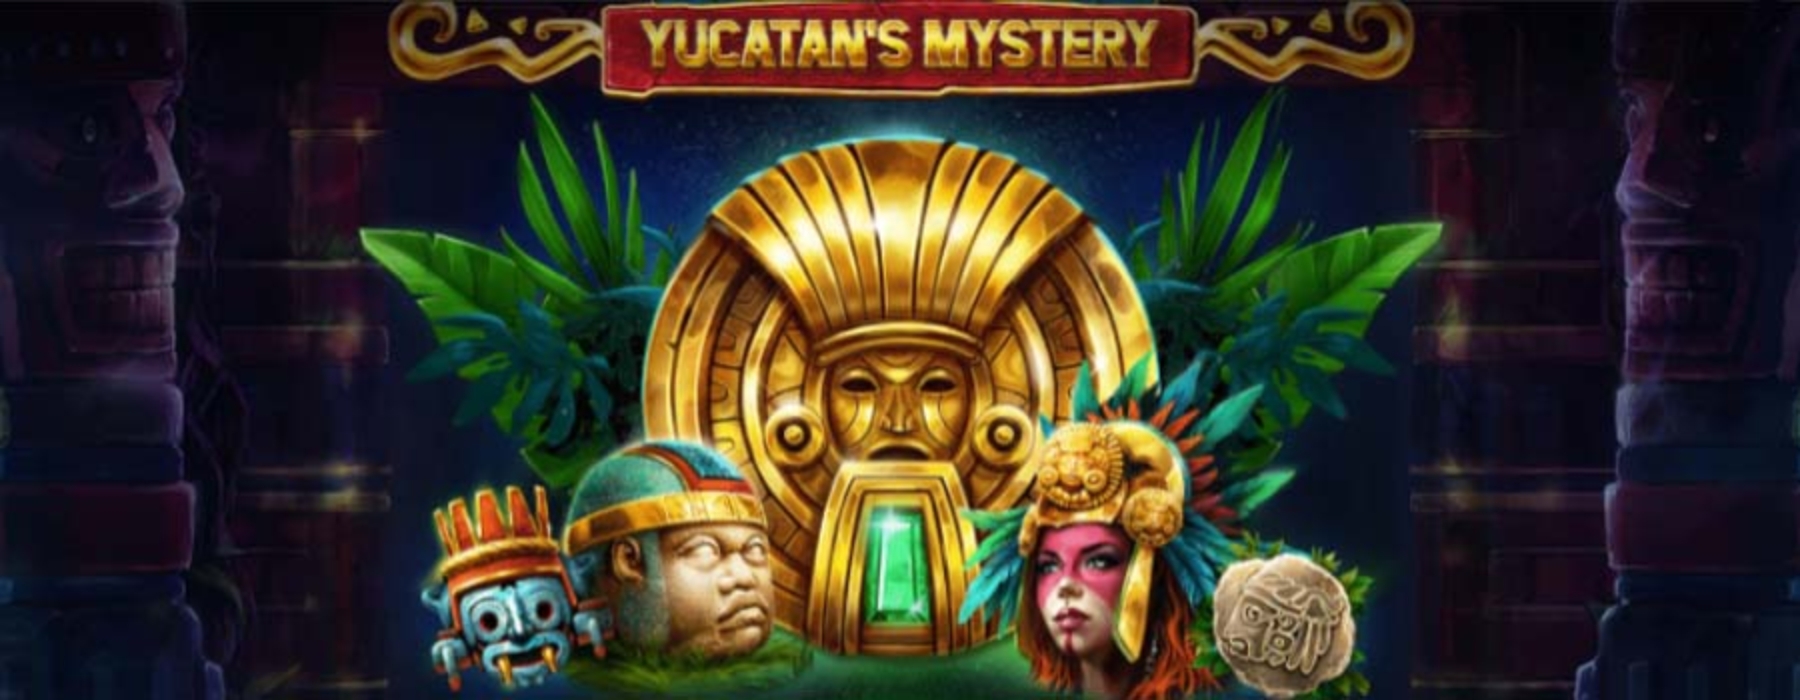 Yucatans Mystery demo